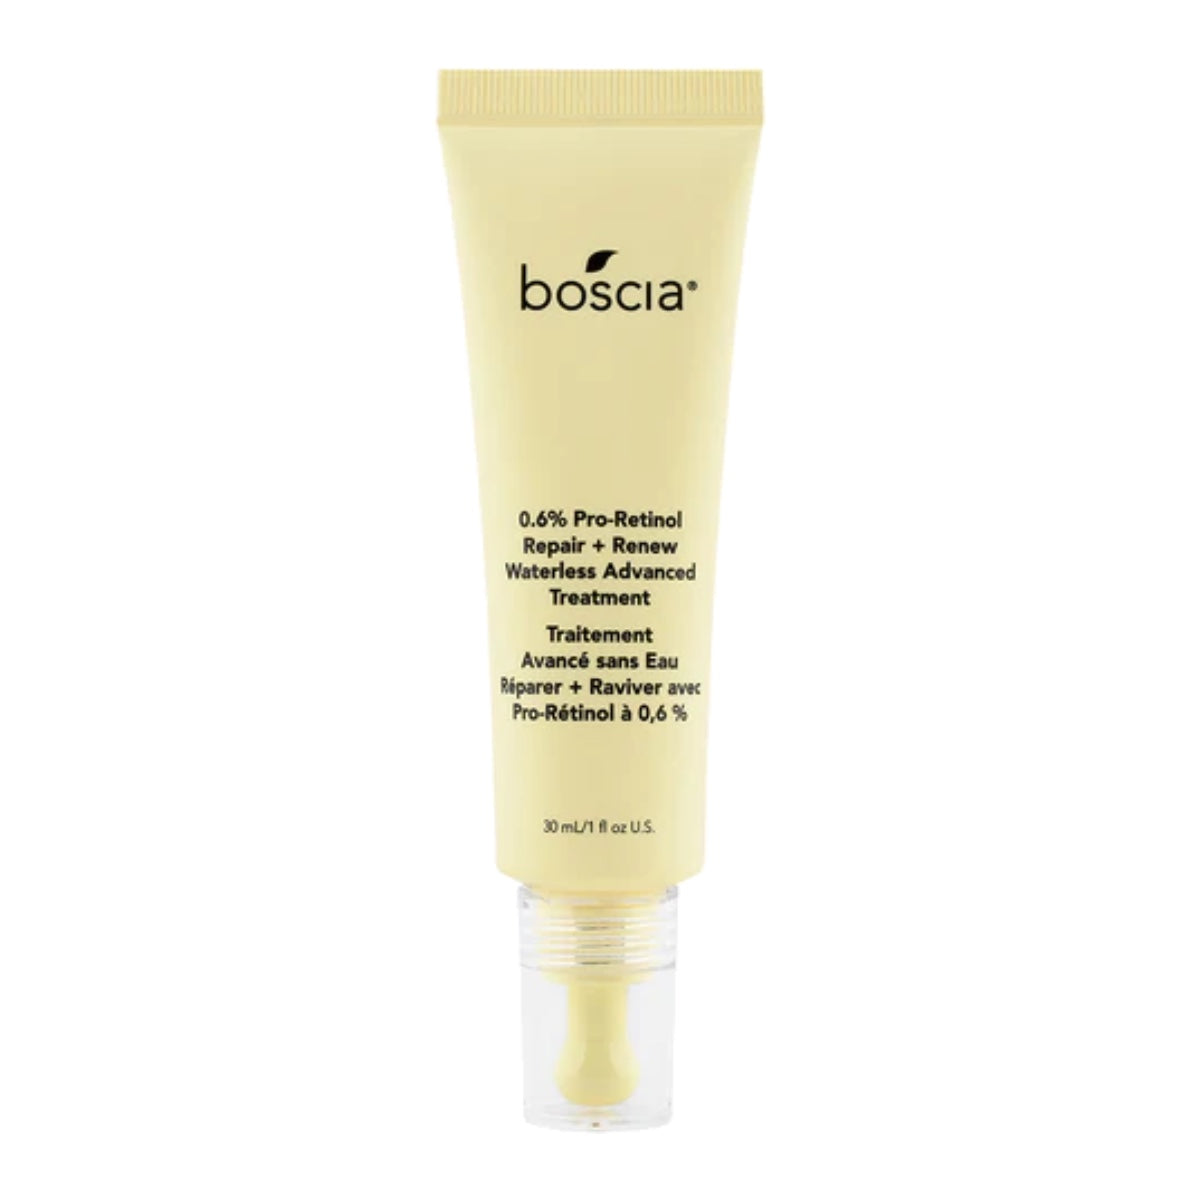 Boscia 0.6% Pro-Retinol Repair + Renew Waterless Advanced Treatment 30 ml